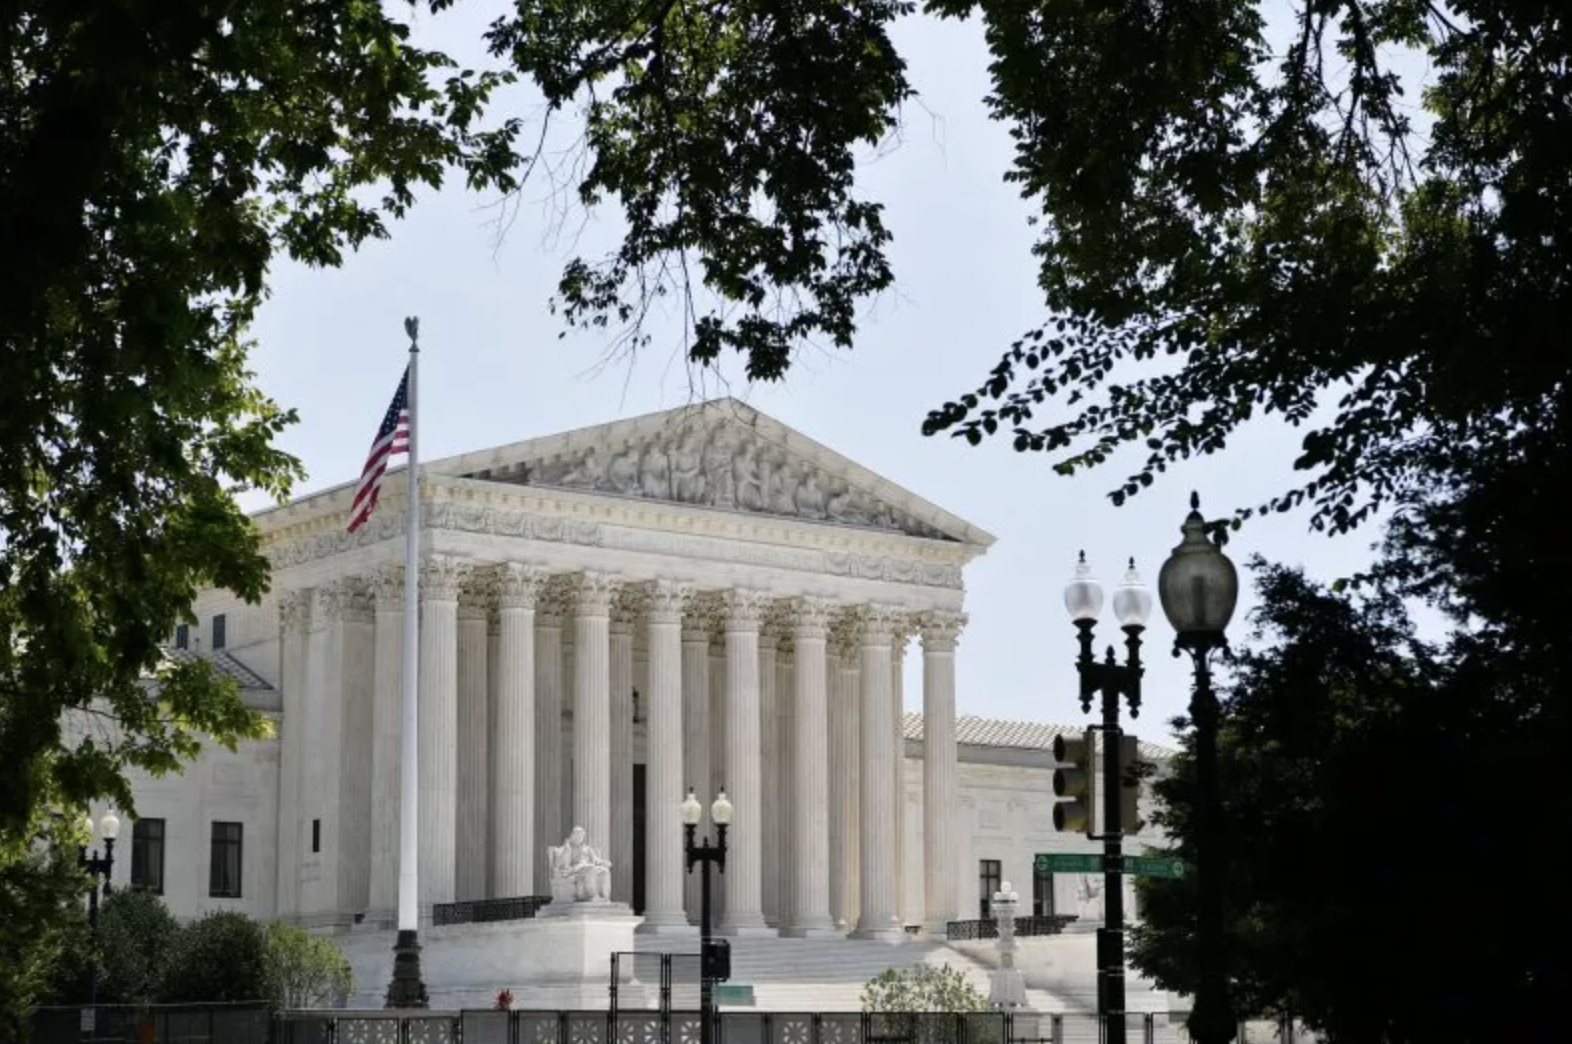 The U.S. Supreme Court is seen. MANDEL NGAN/AFP VIA GETTY IMAGES